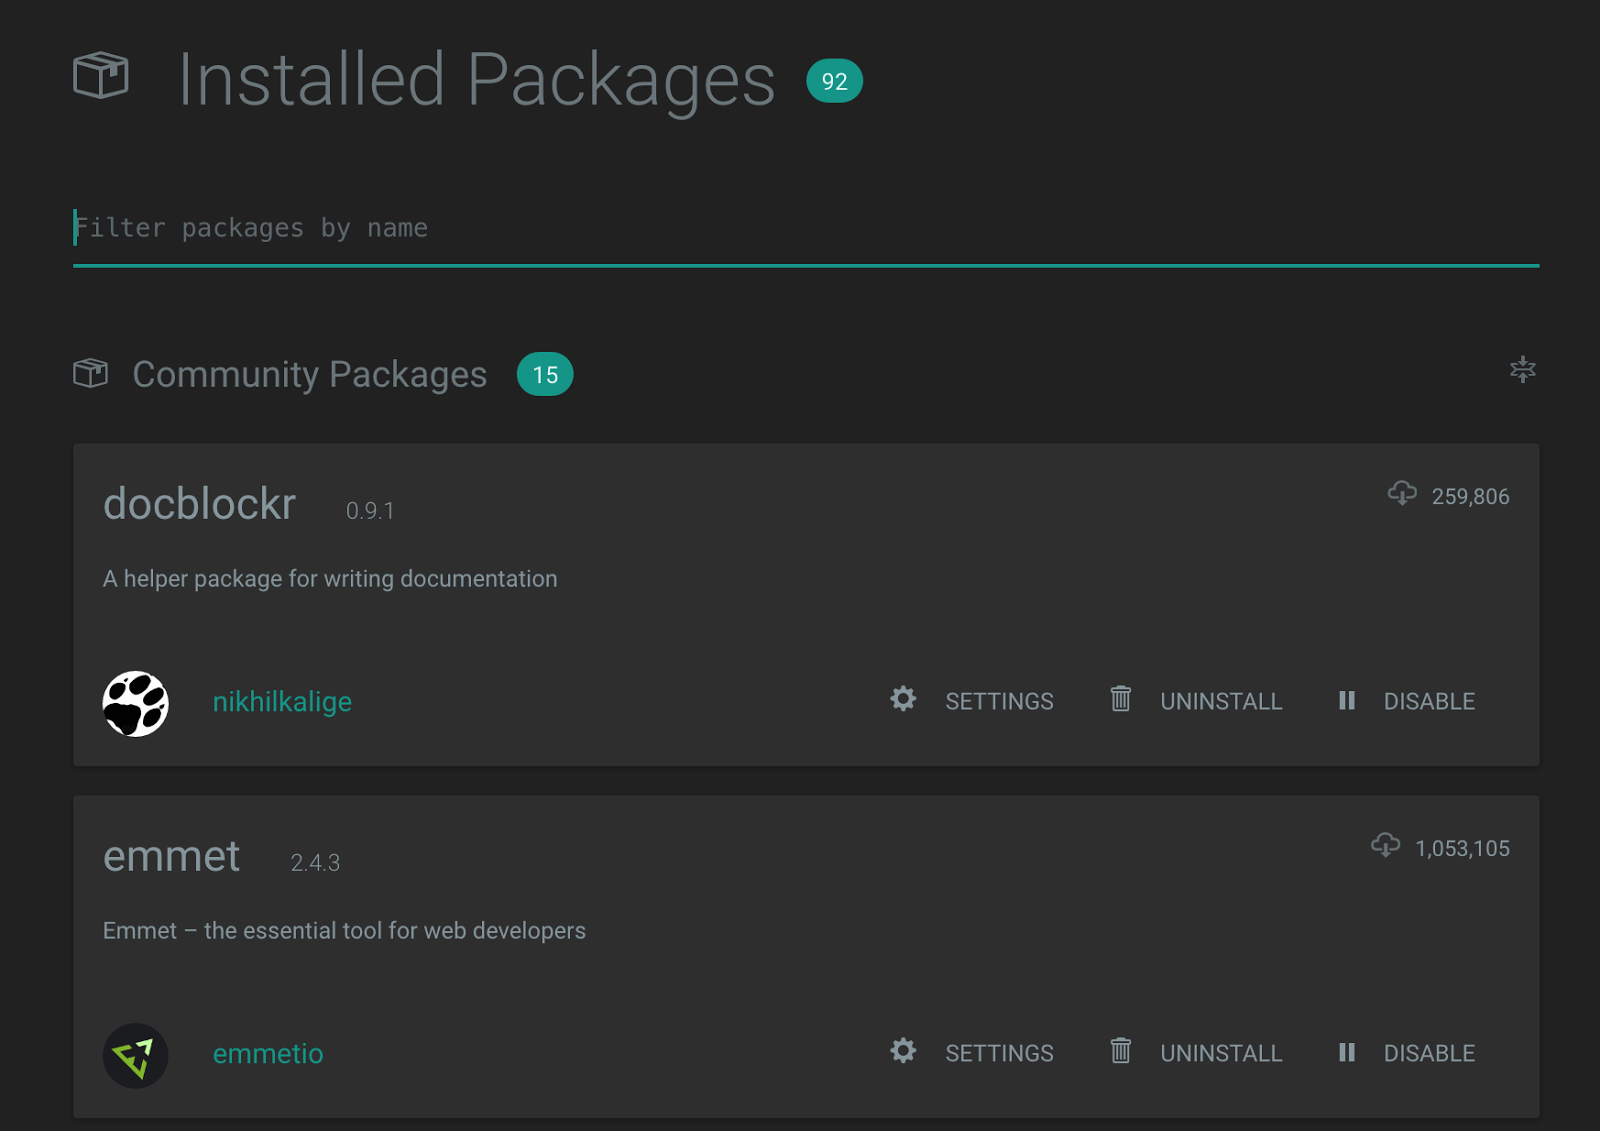 Update package installed